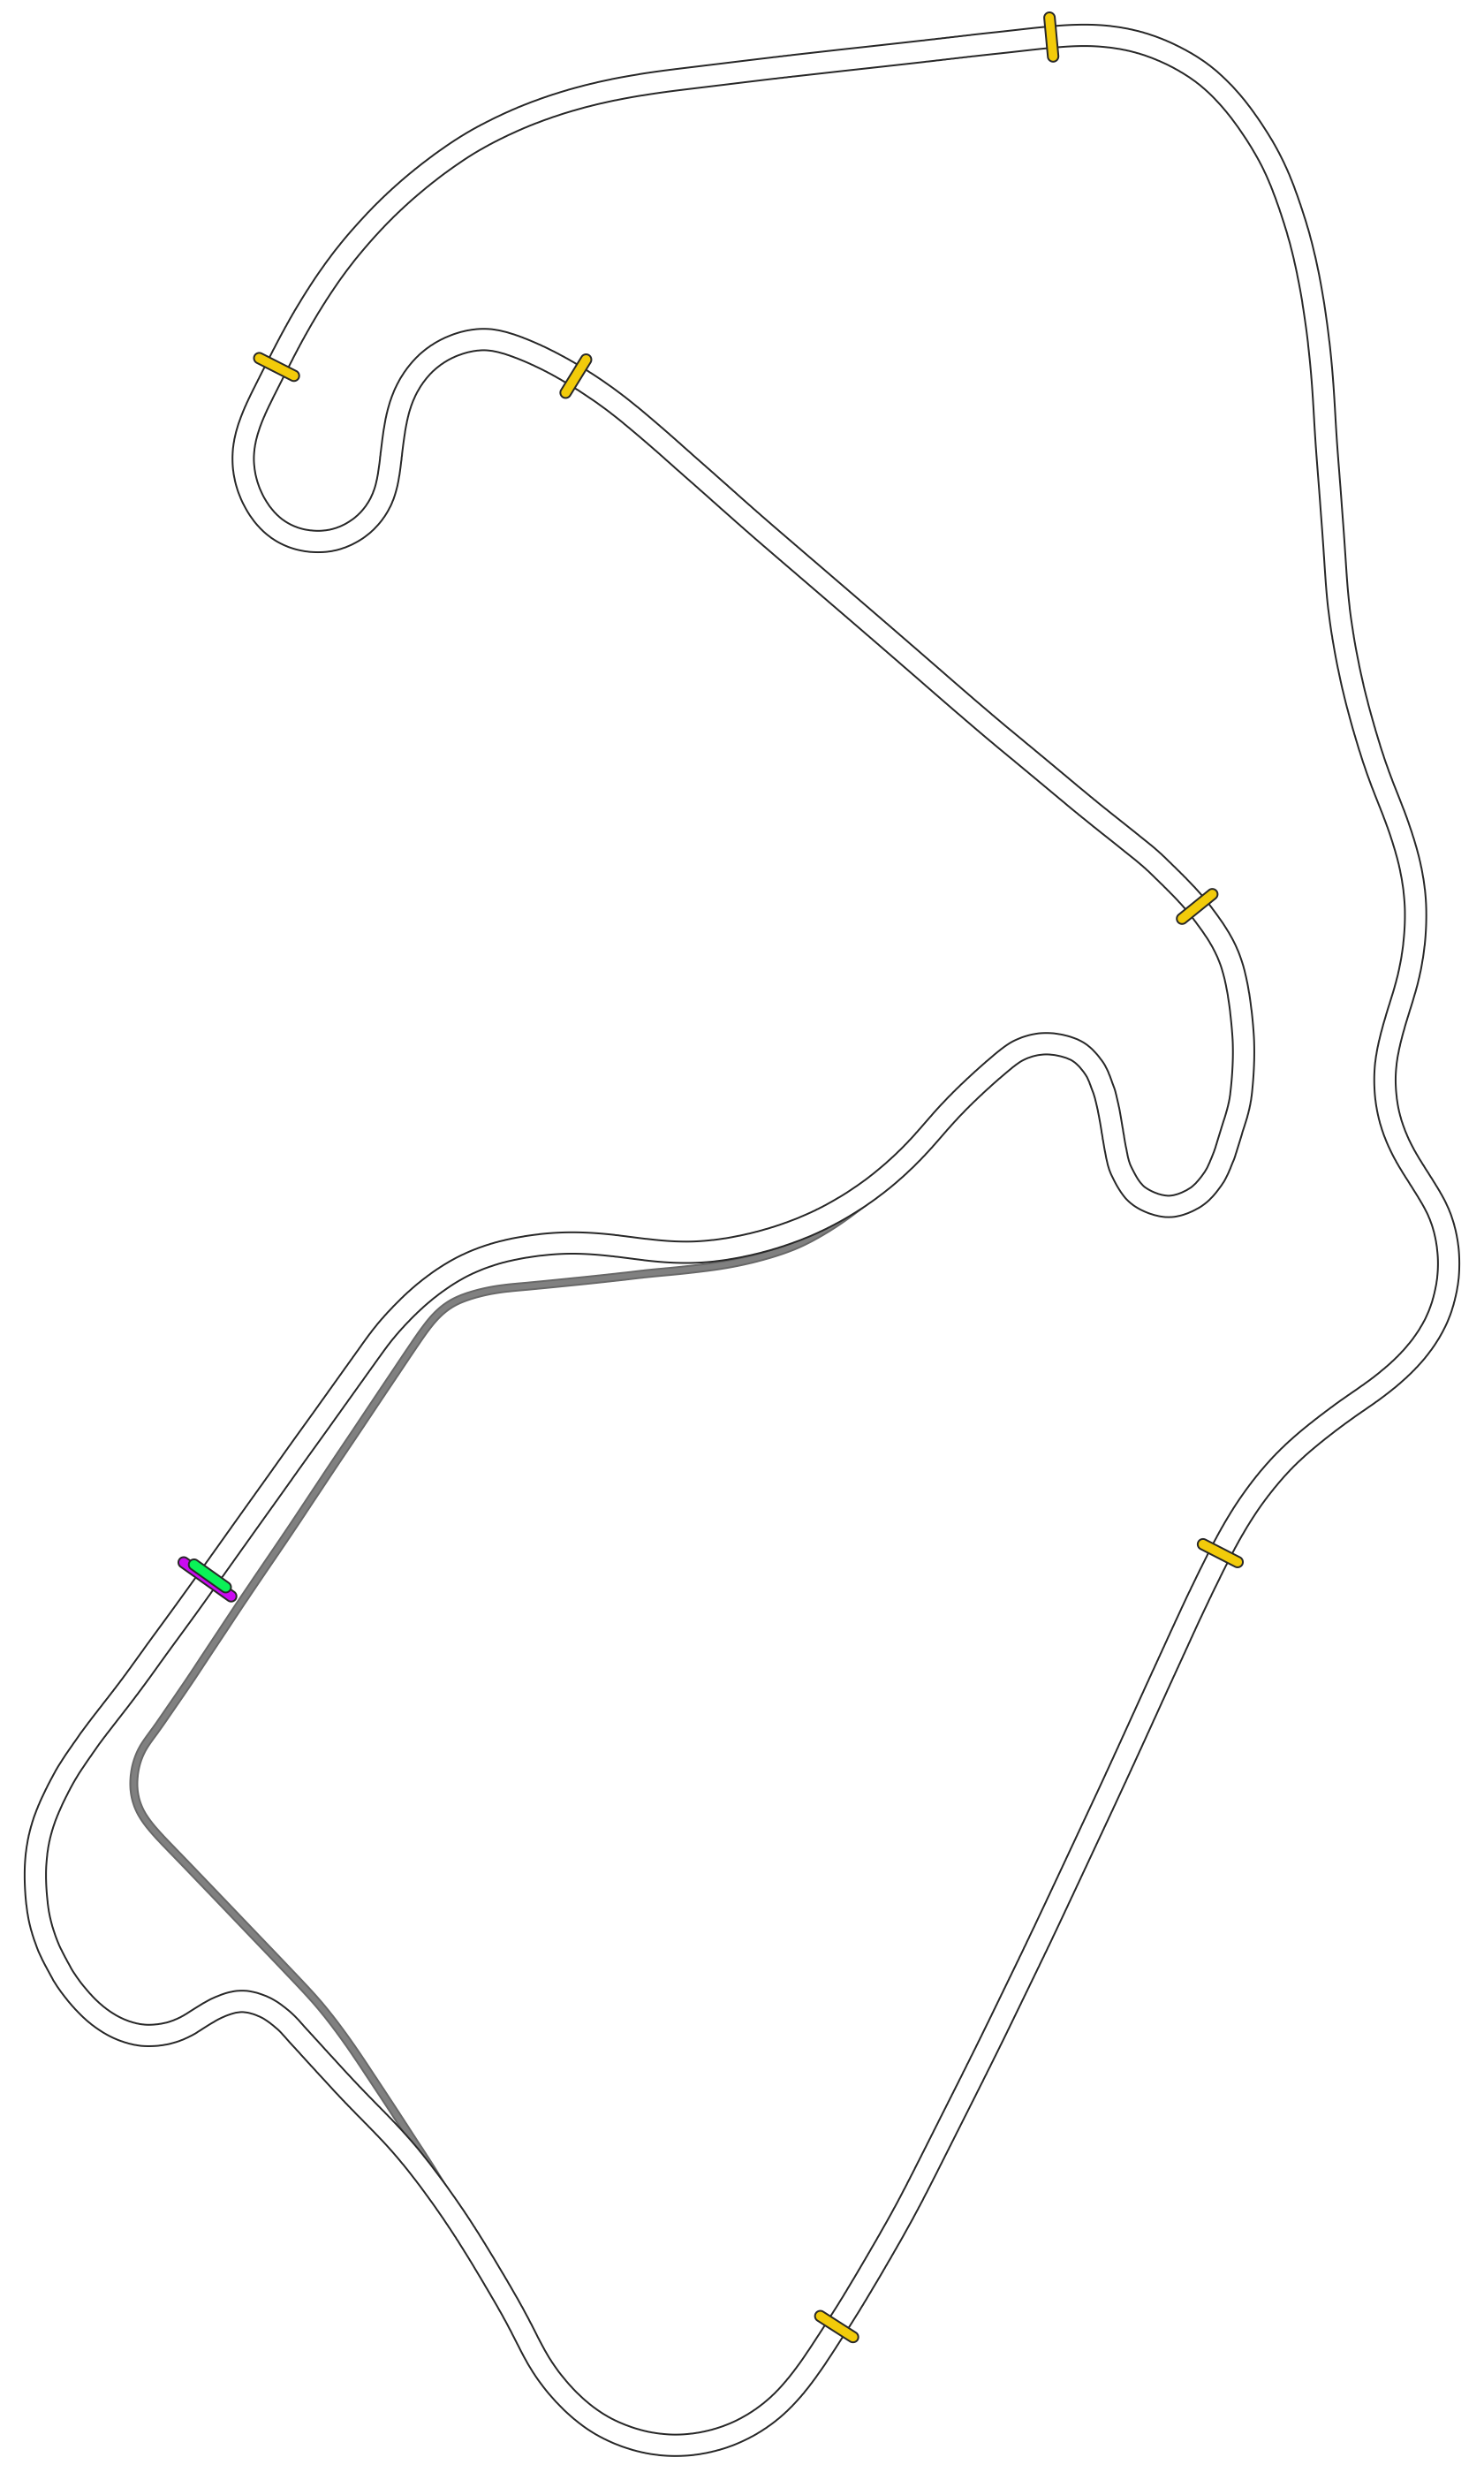 SRV Silverstone - Layout GP (3xDRS)